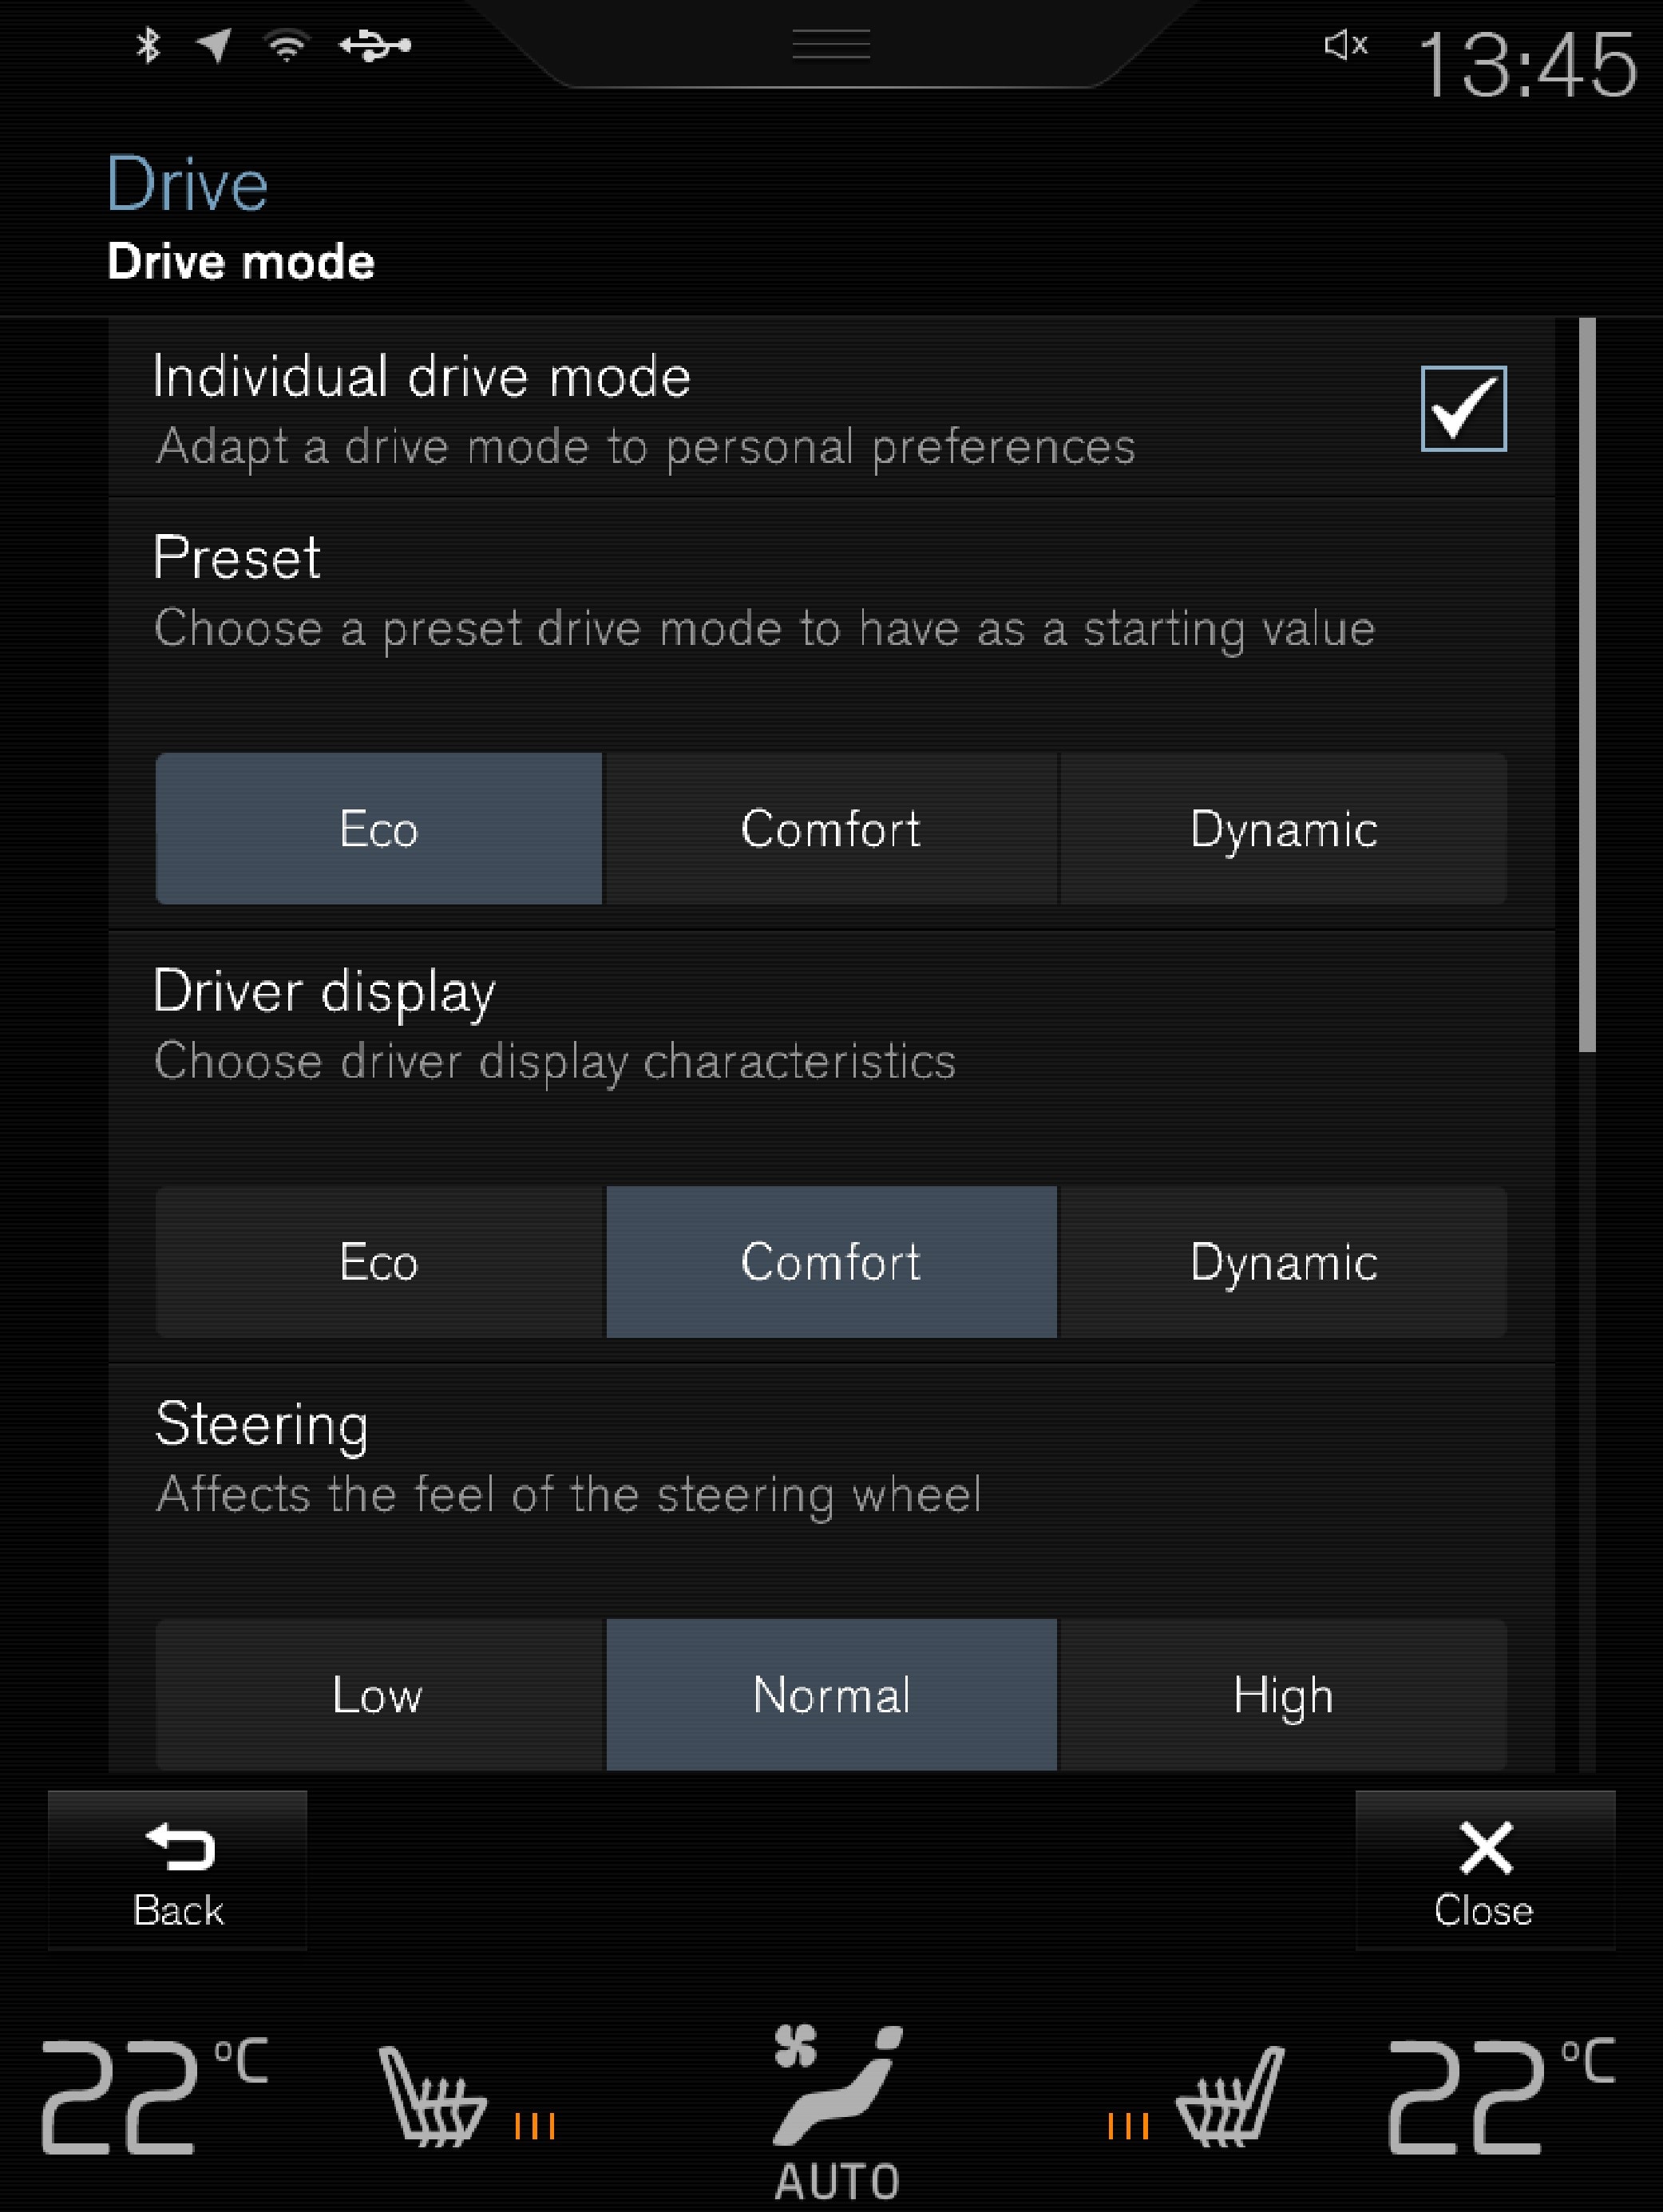 P5-1507-Individual drive mode settings view